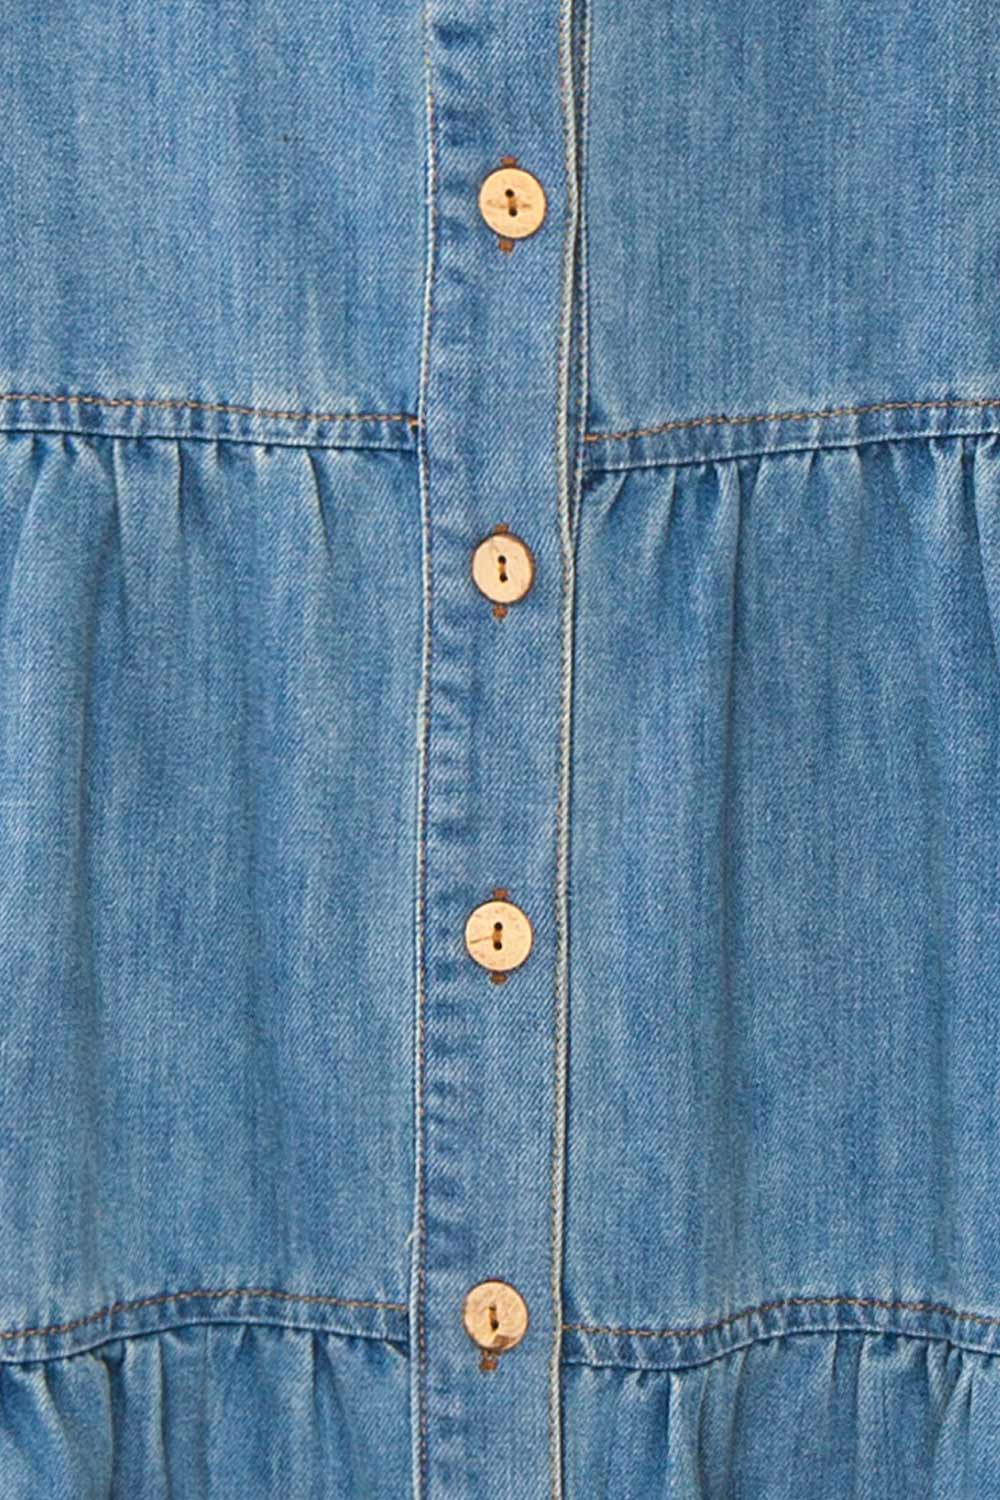 Moprina Long Blue Denim Dress w/ Pockets | Boutique 1861 fabric 